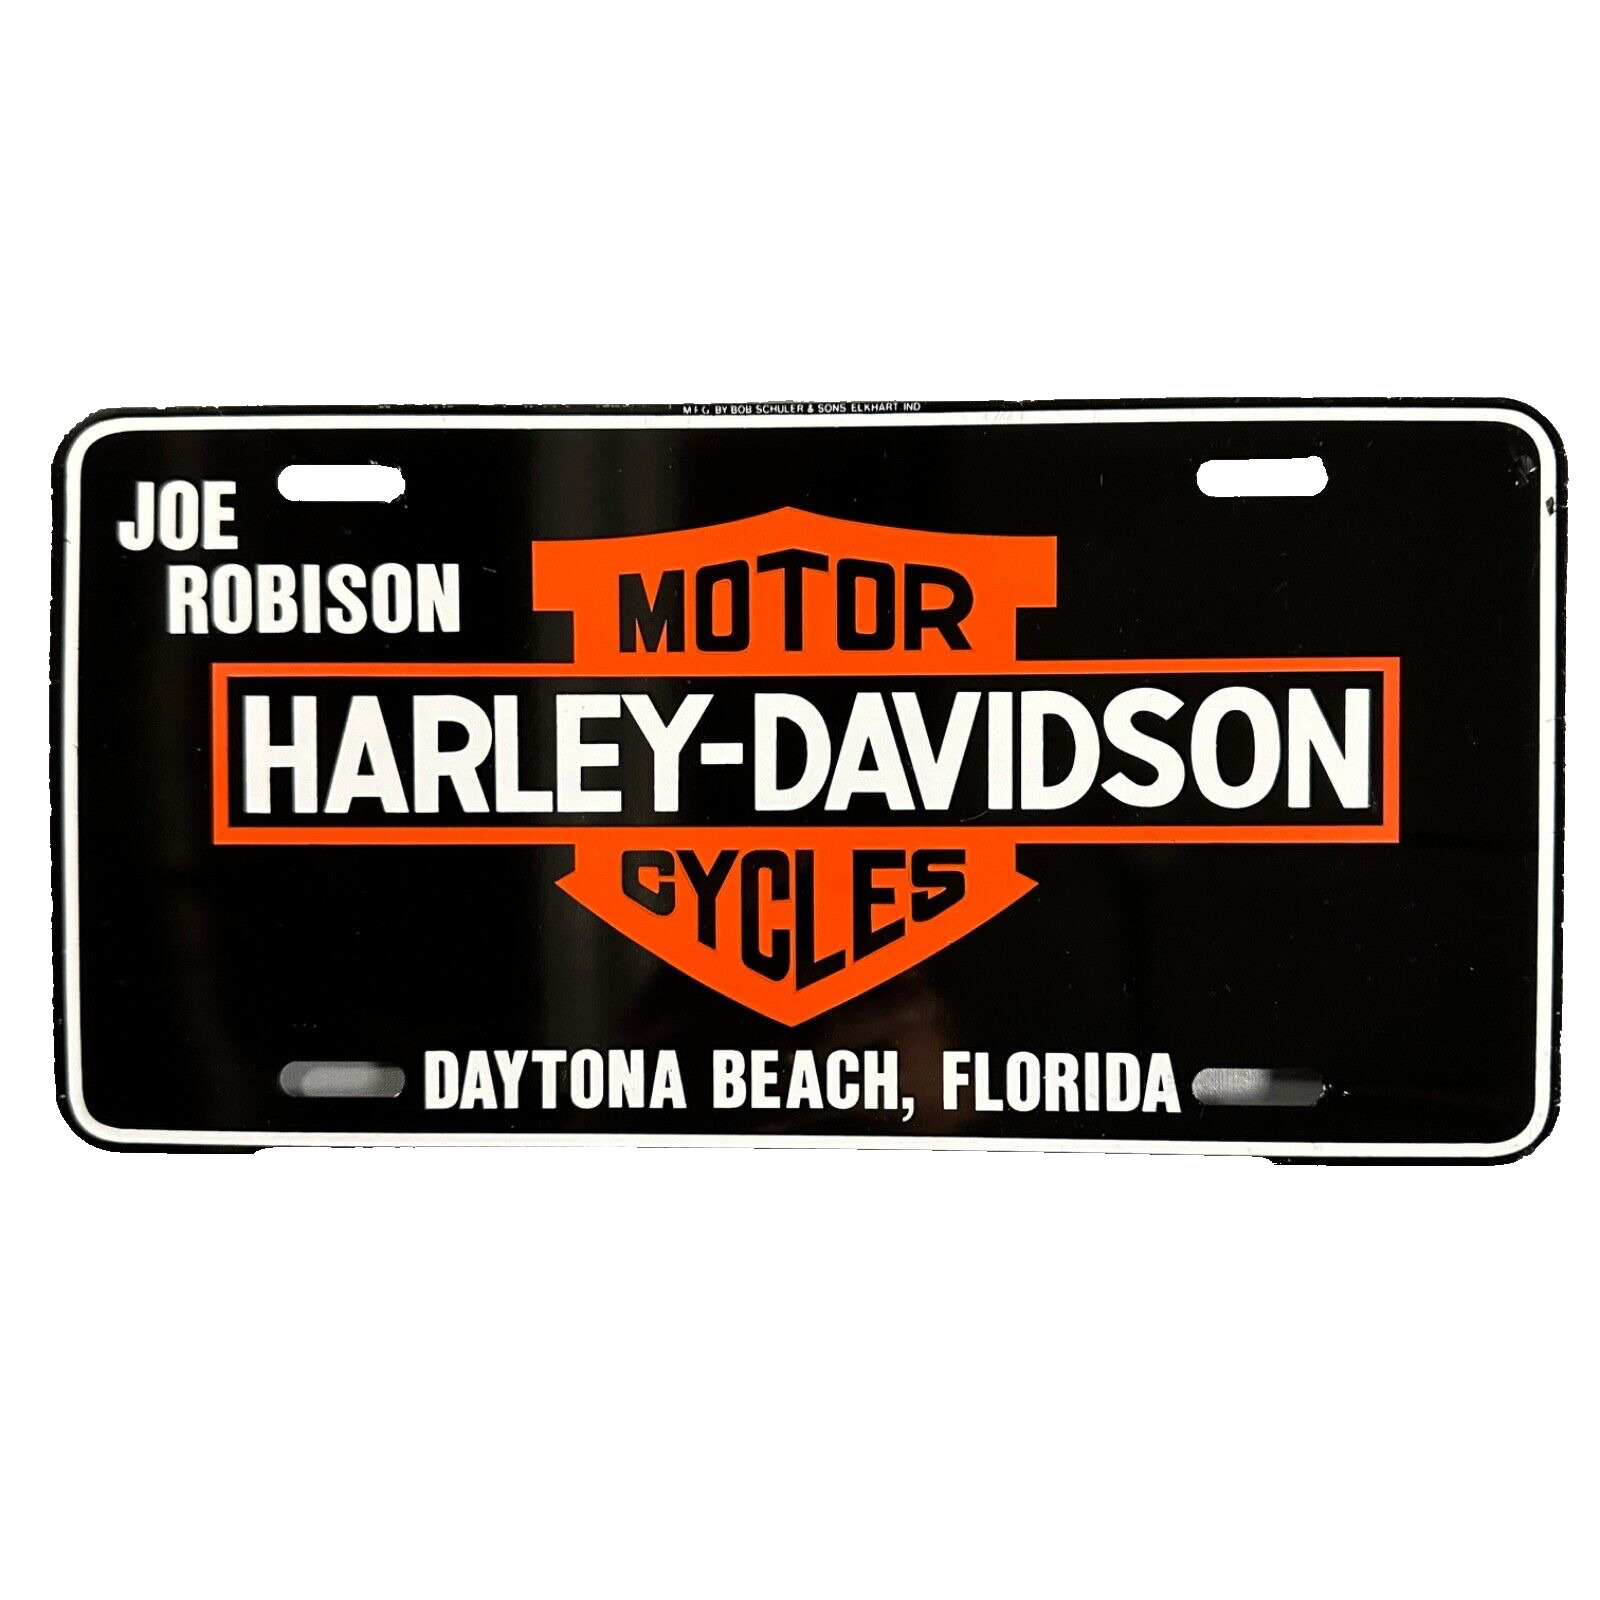 Vintage Harley Davidson License Plate USA Joe Robison Daytona Beach